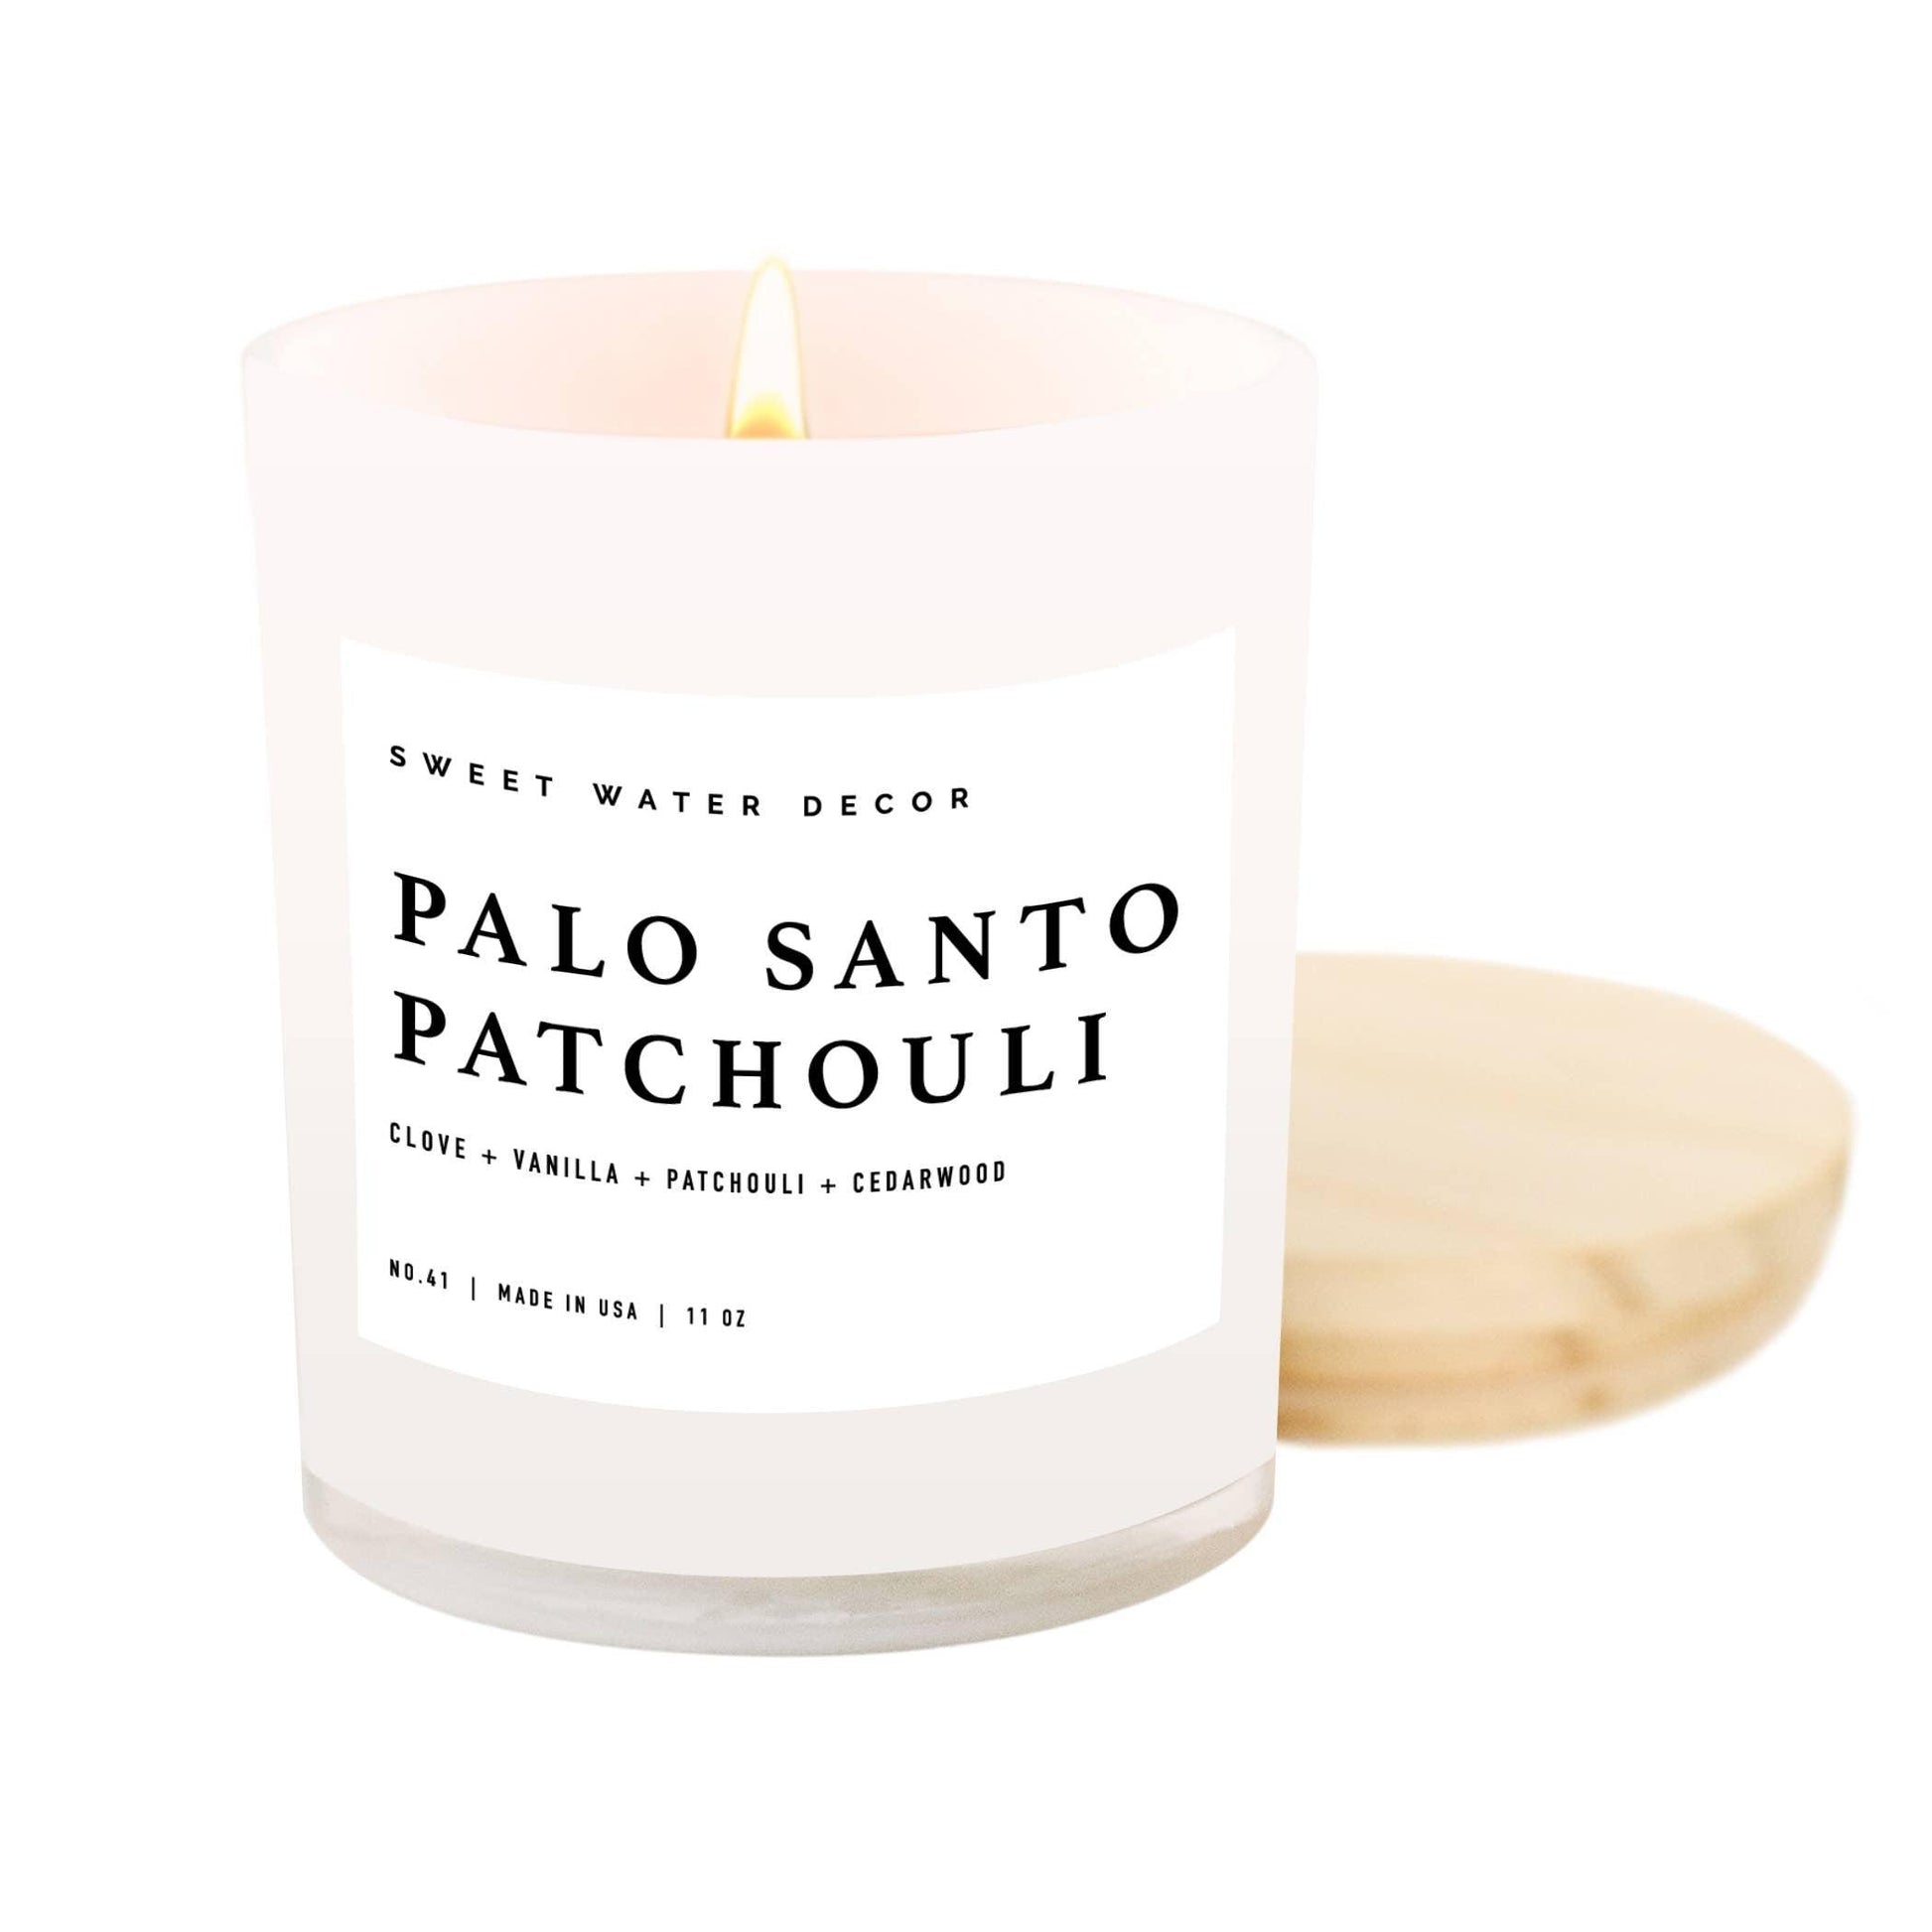 Palo Santo Patchouli Soy Candle - White Jar - 11 oz - The Silver Dahlia